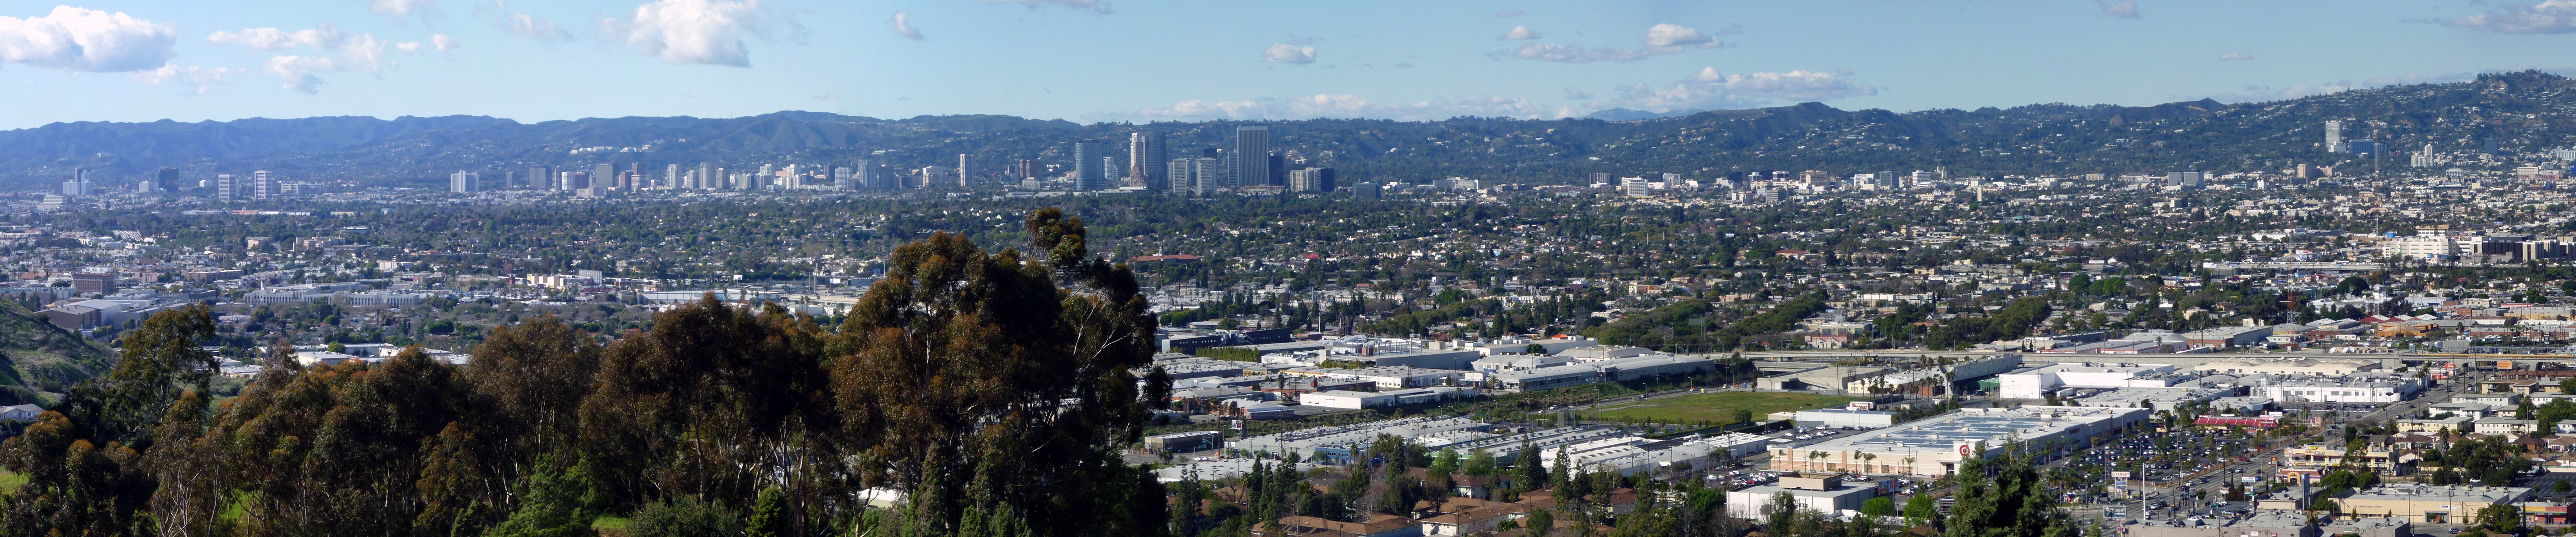 General 5760x1200 city Los Angeles triple screen cityscape USA